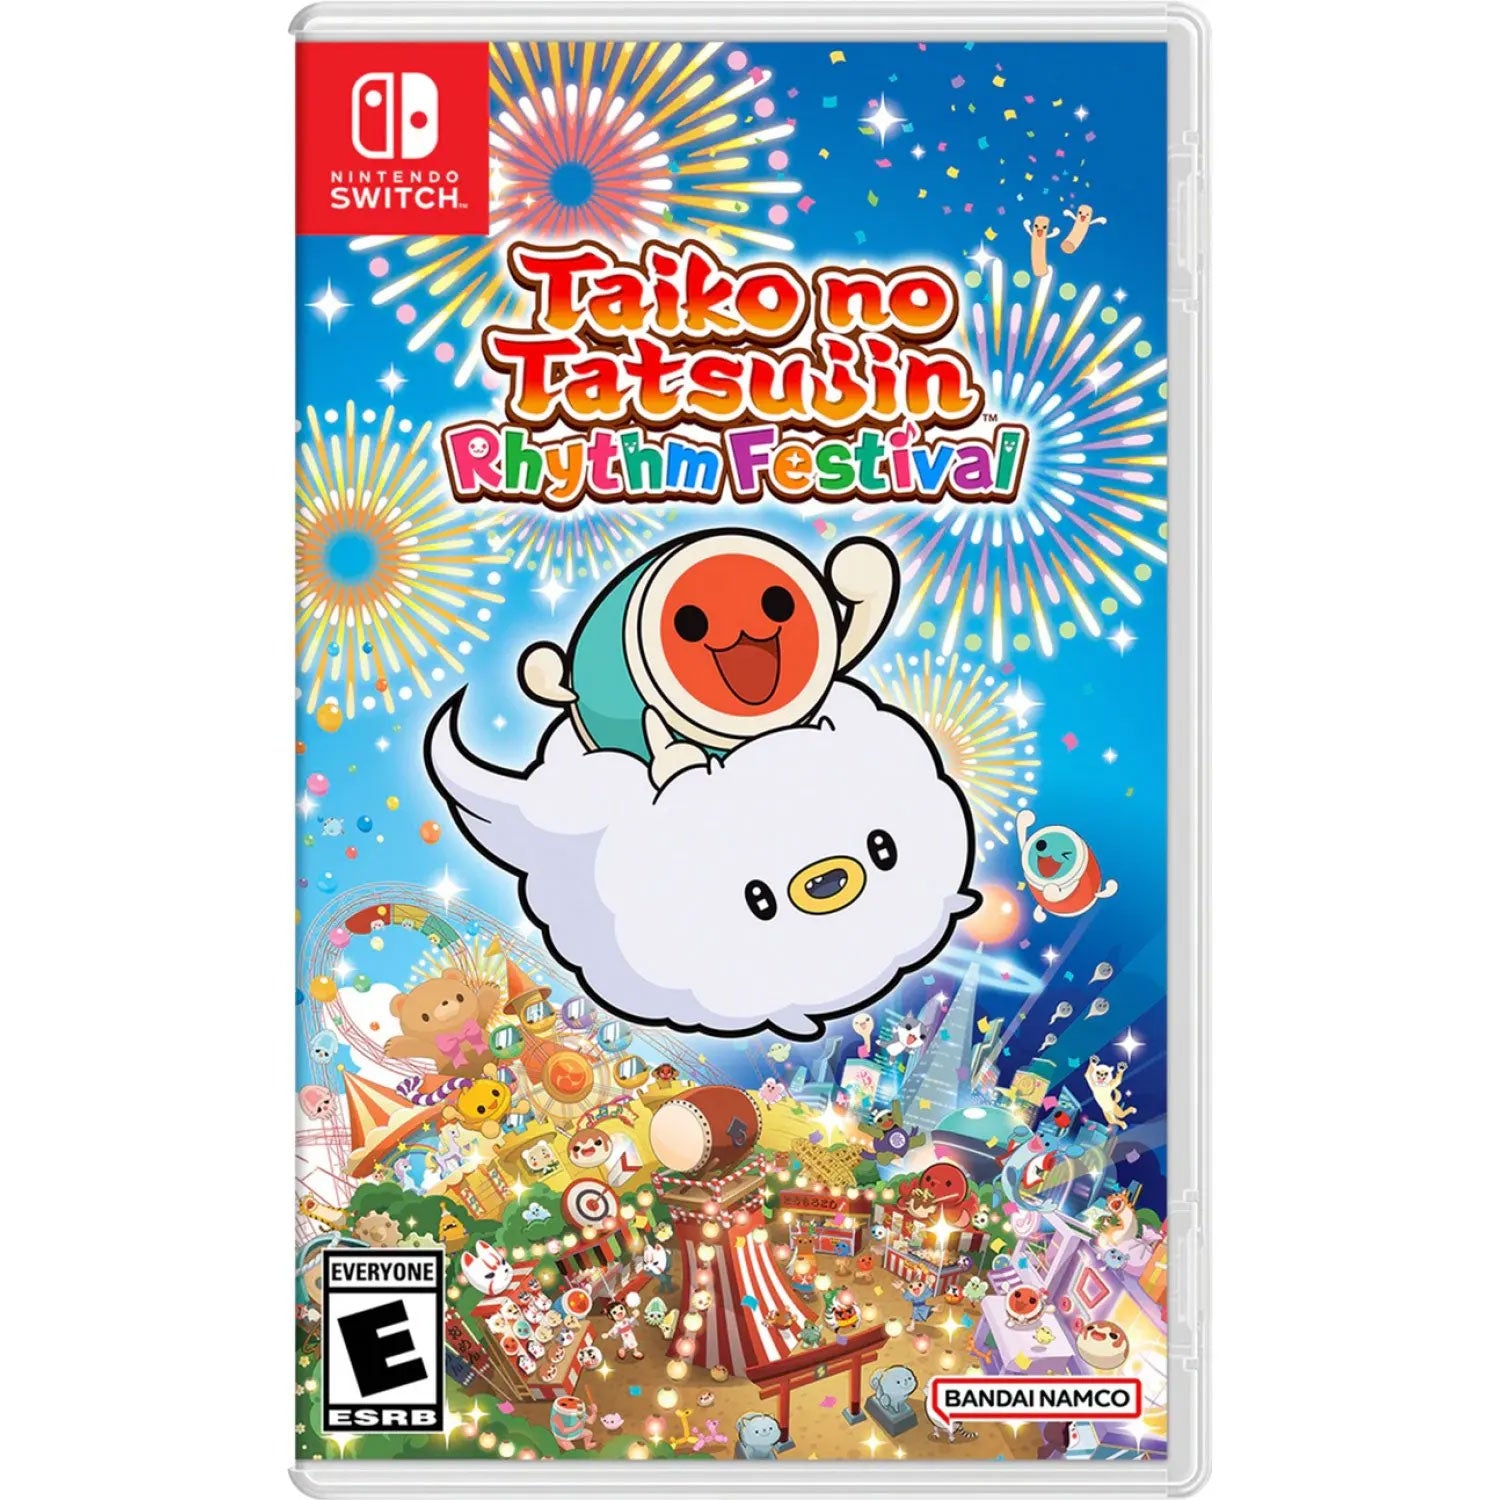 Nintendo Switch Taiko no Tatsujin: Rhythm Festival